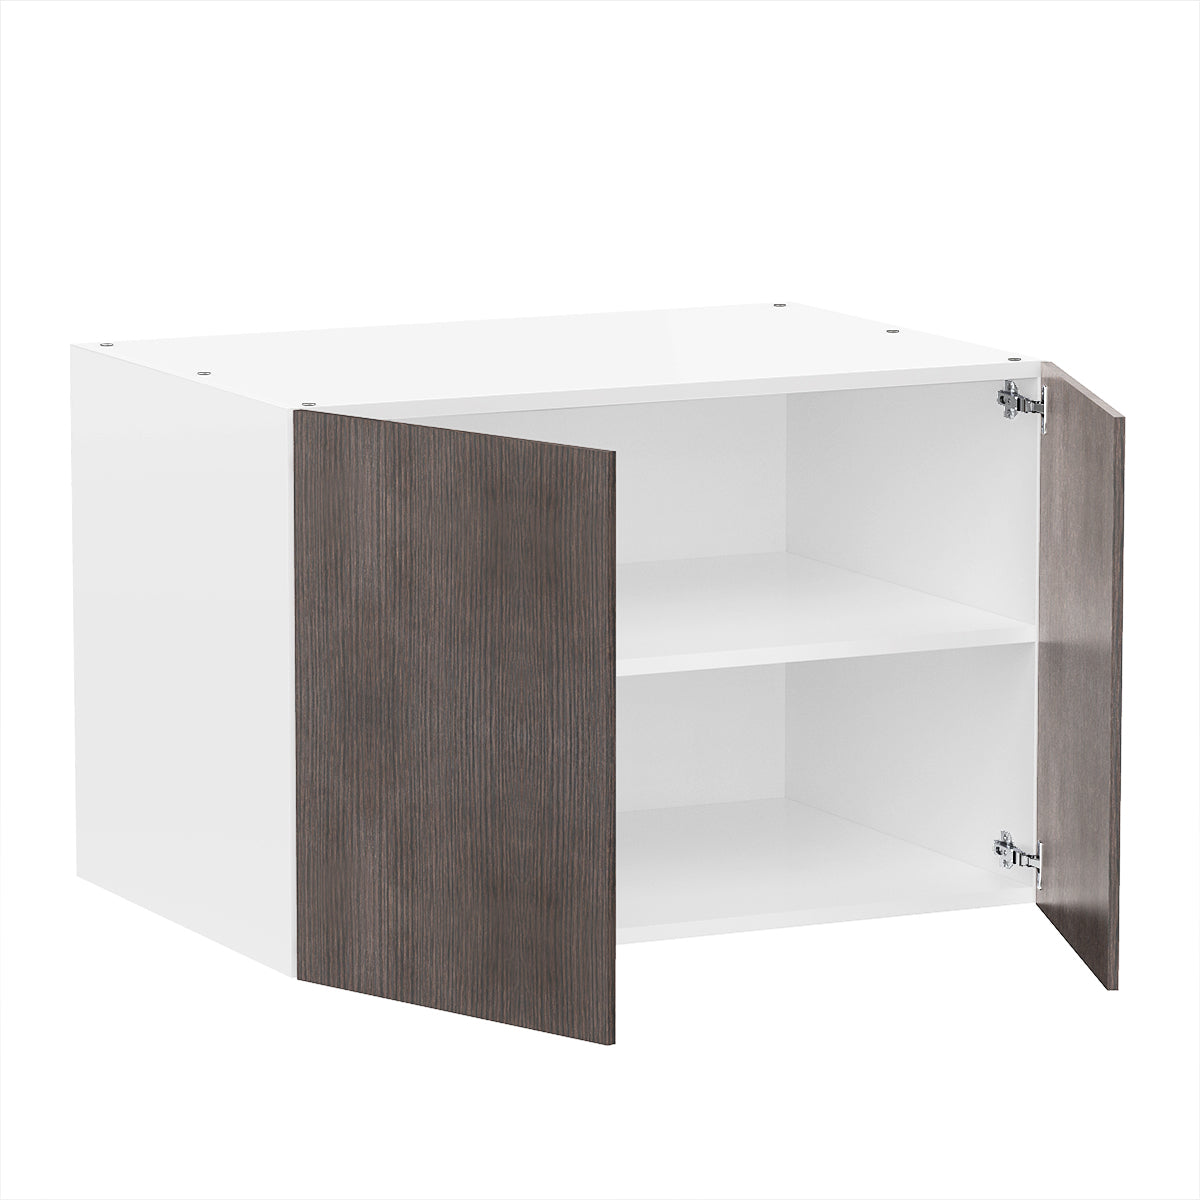 RTA - Brown Oak - Double Door Refrigerator Wall Cabinets | 30"W x 24"H x 24"D